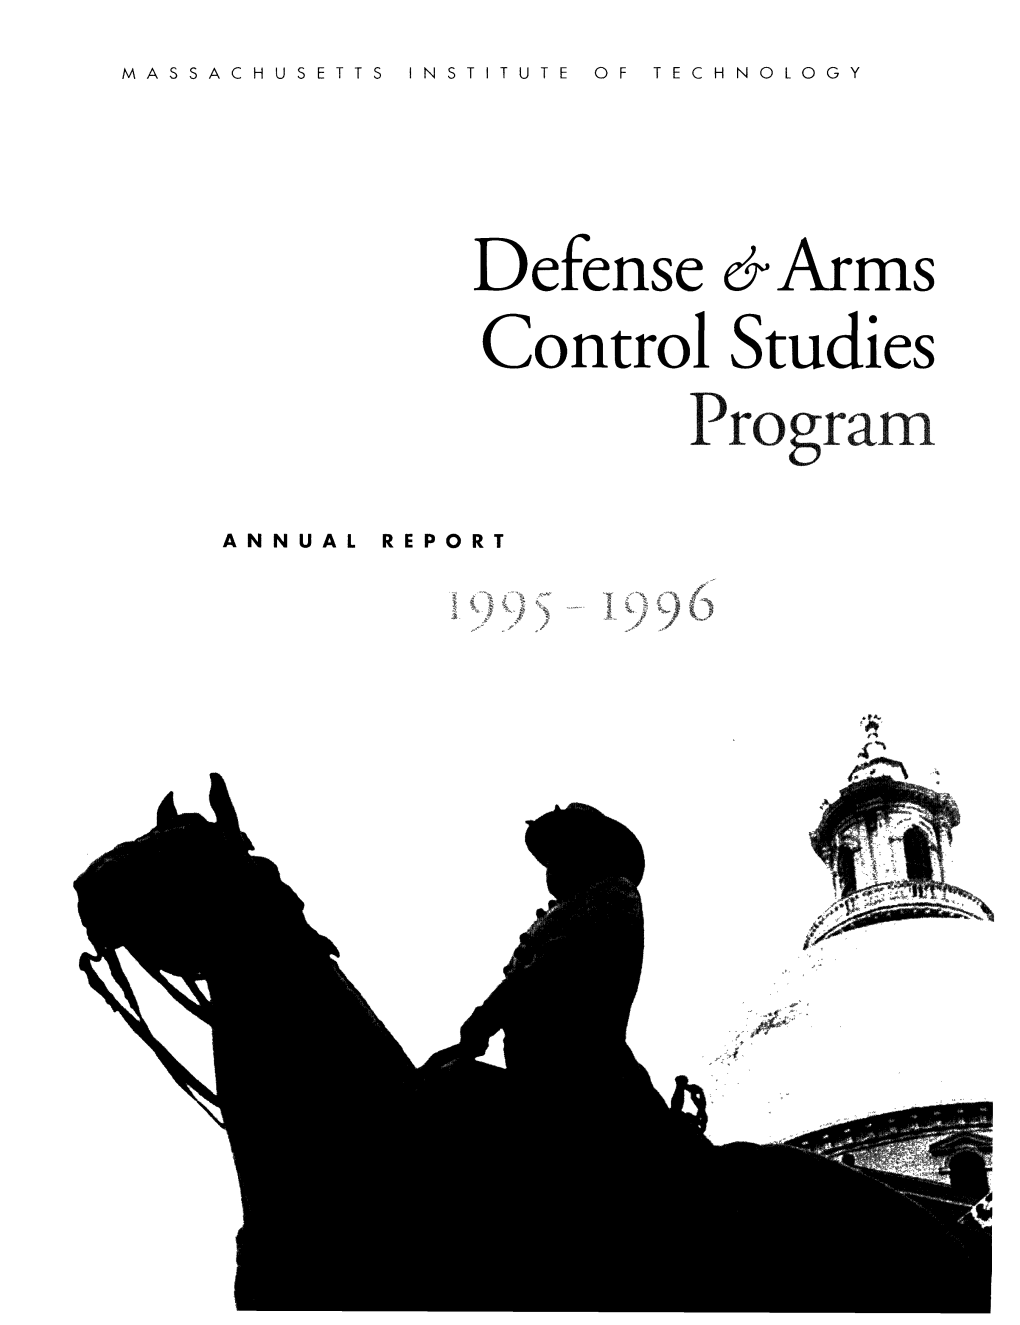 Control Studies Program